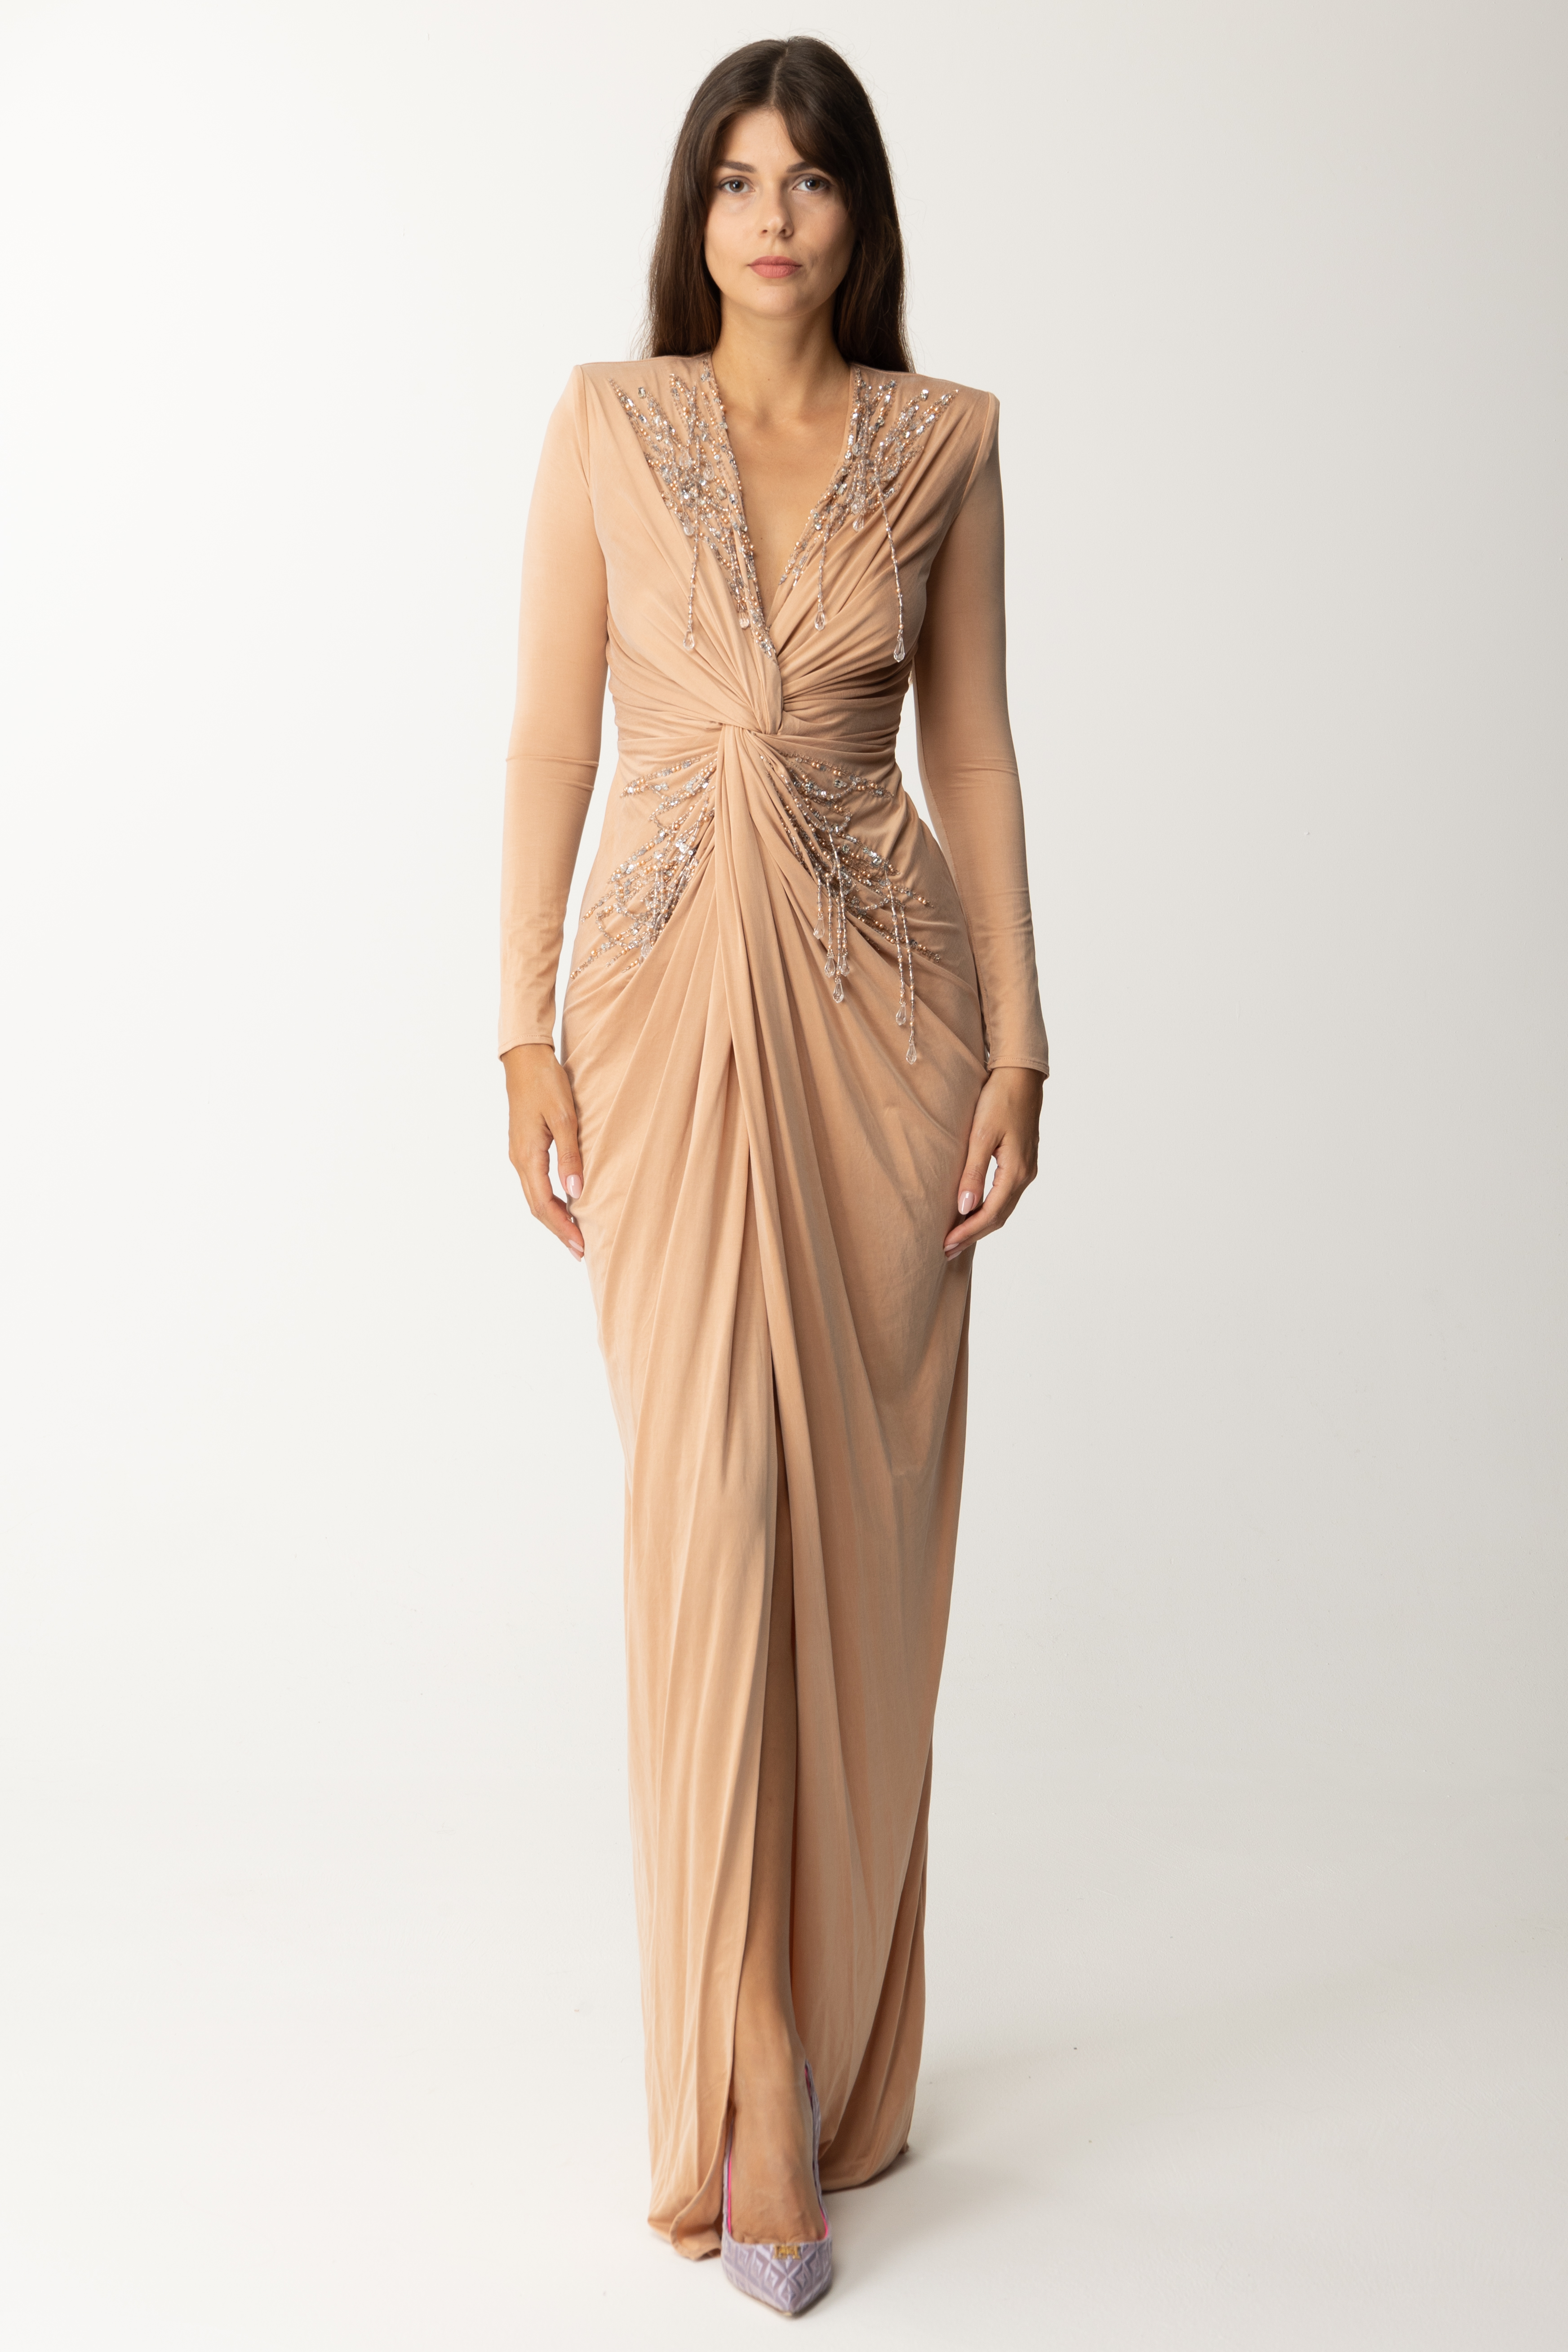 Preview: Elisabetta Franchi Red carpet dress with sequins SKIN